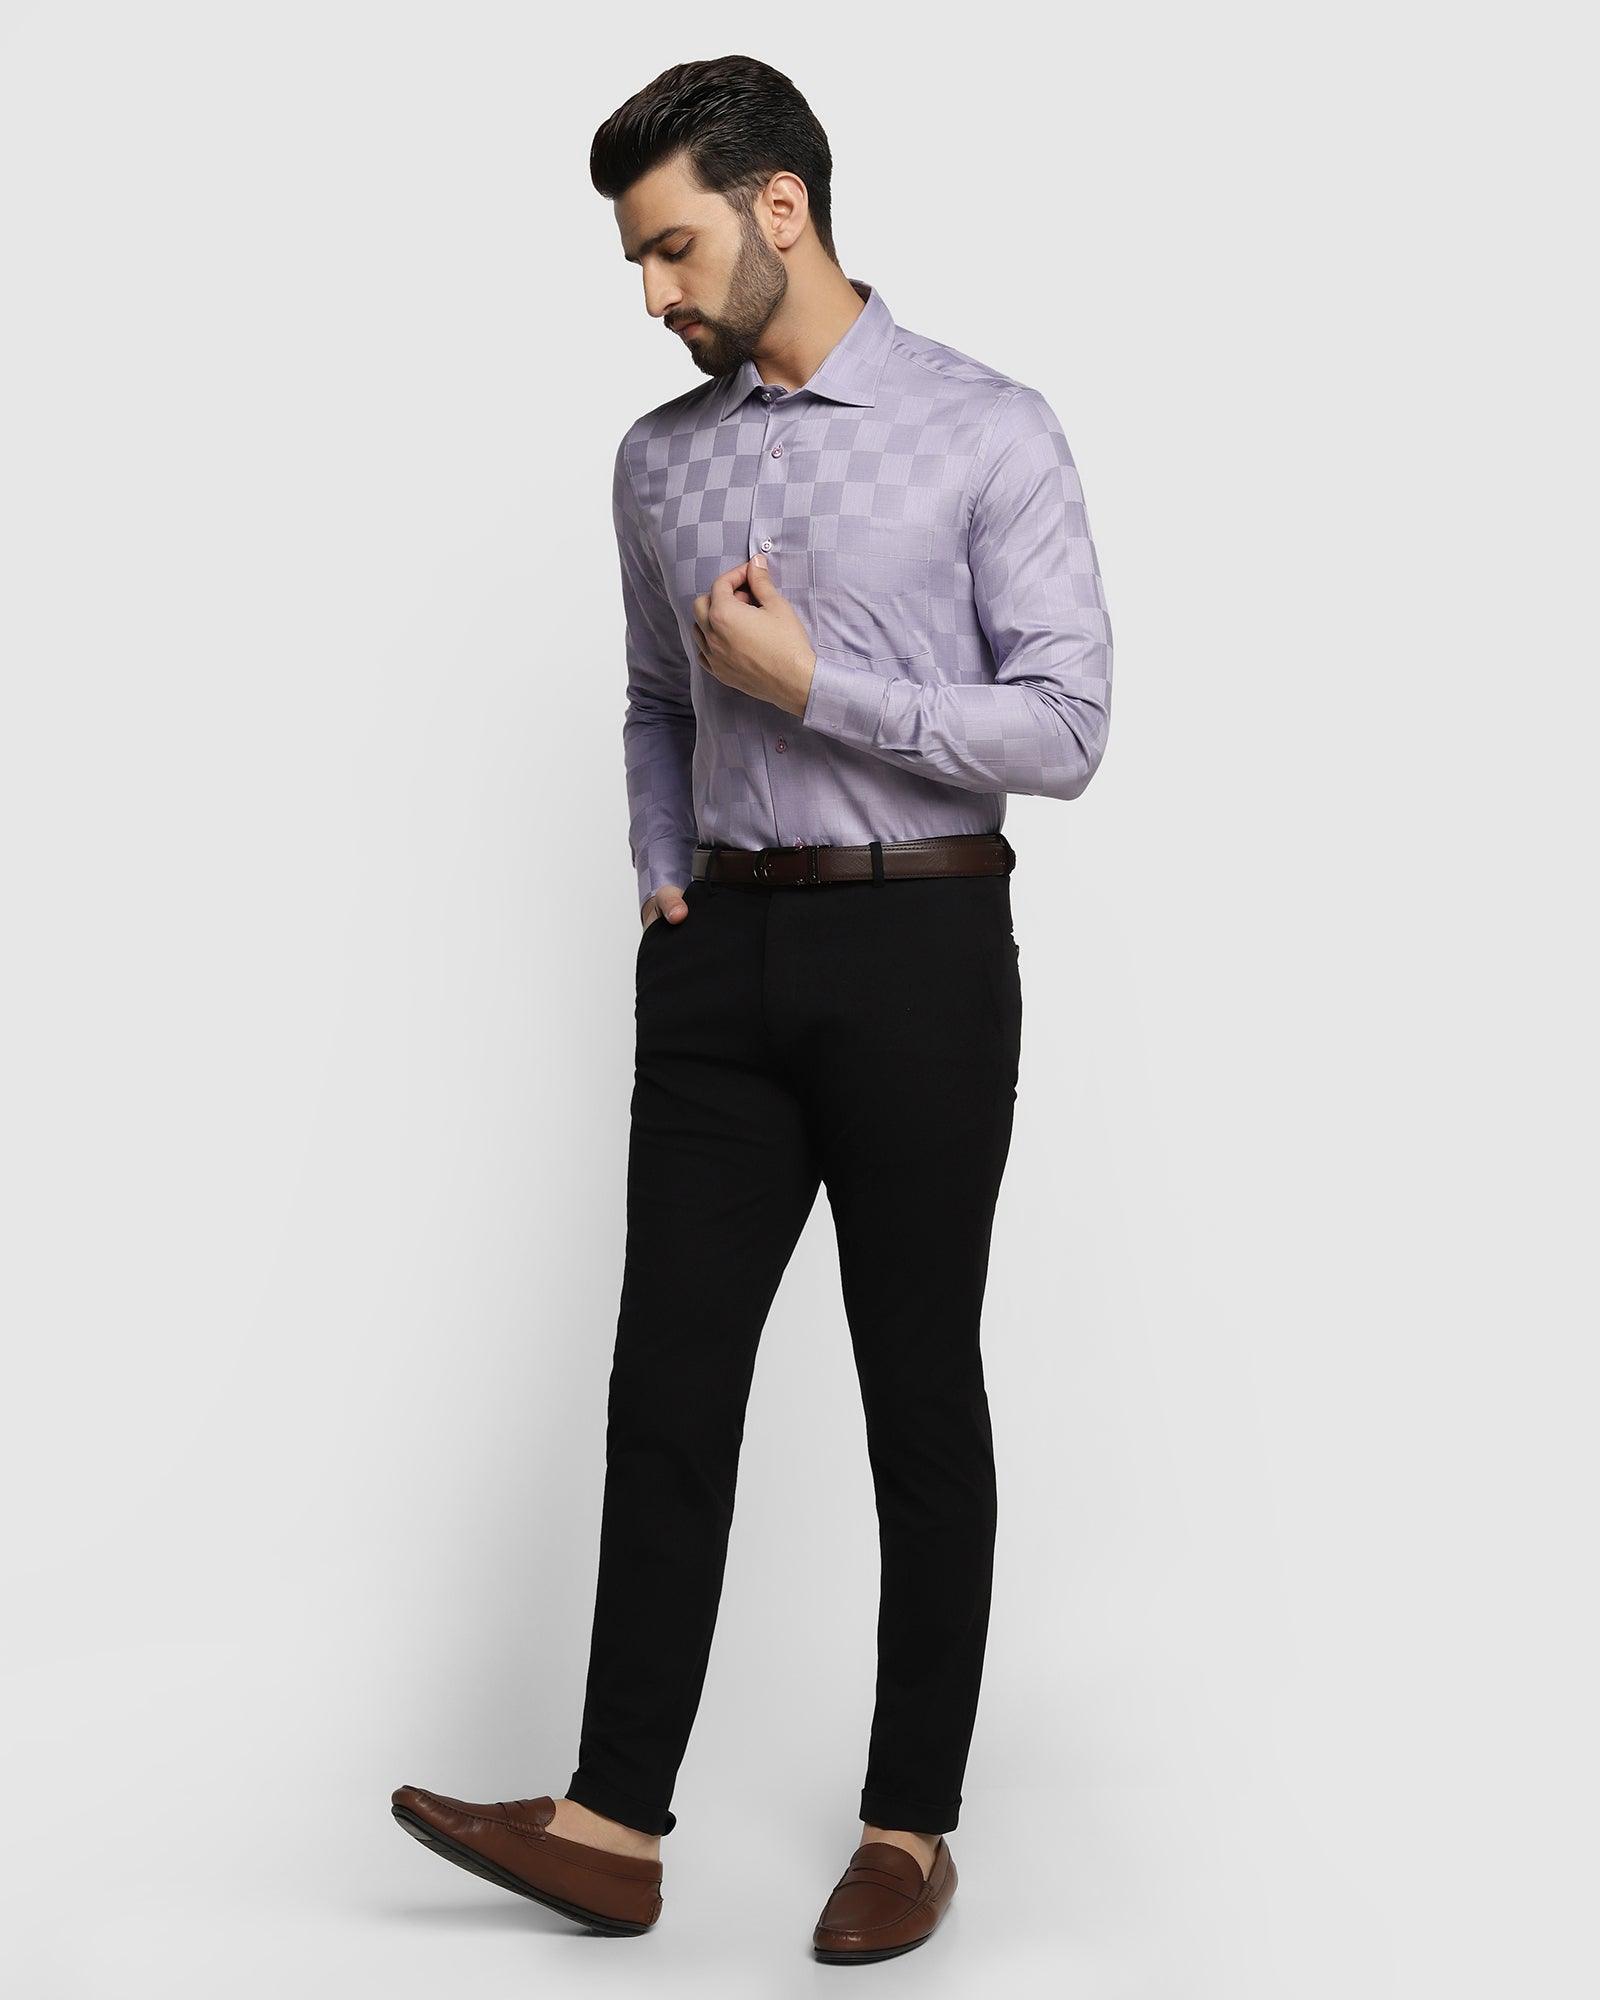 Man in Purple Coat and Black Pants · Free Stock Photo